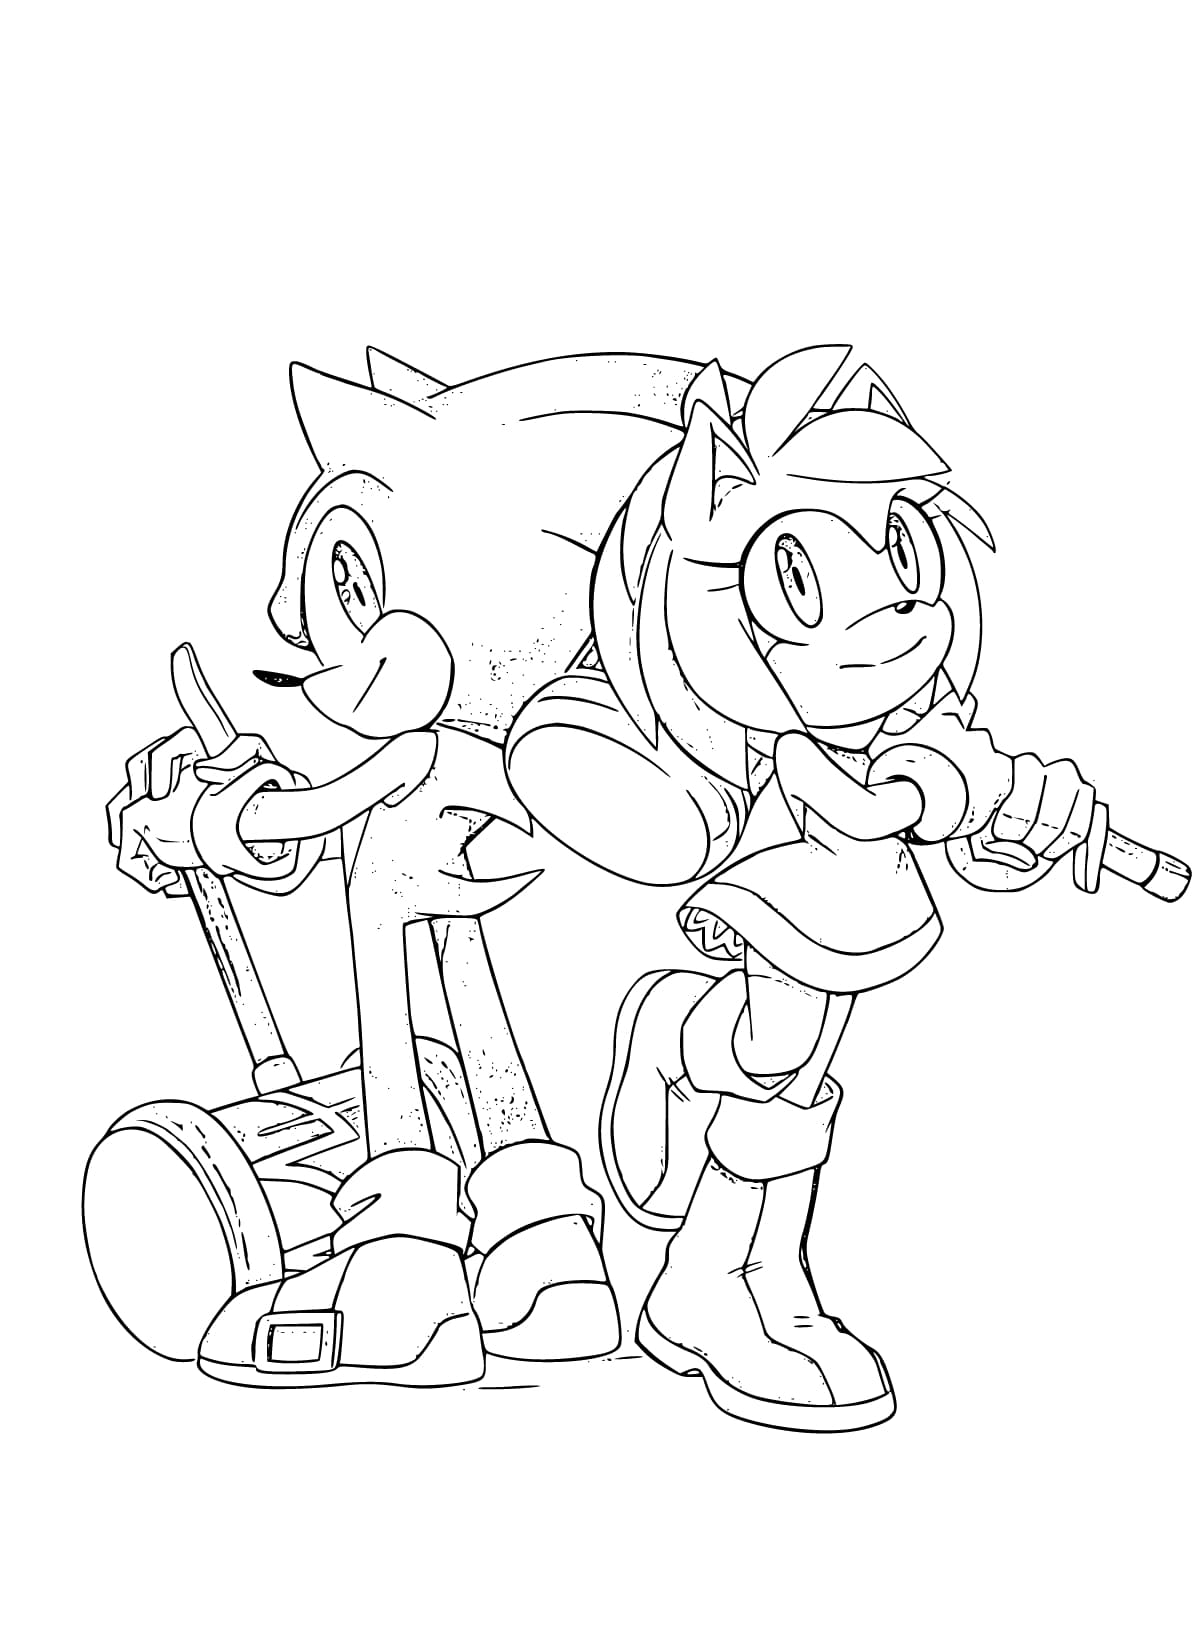 Amy Rose Super Sonic desenho para colorir